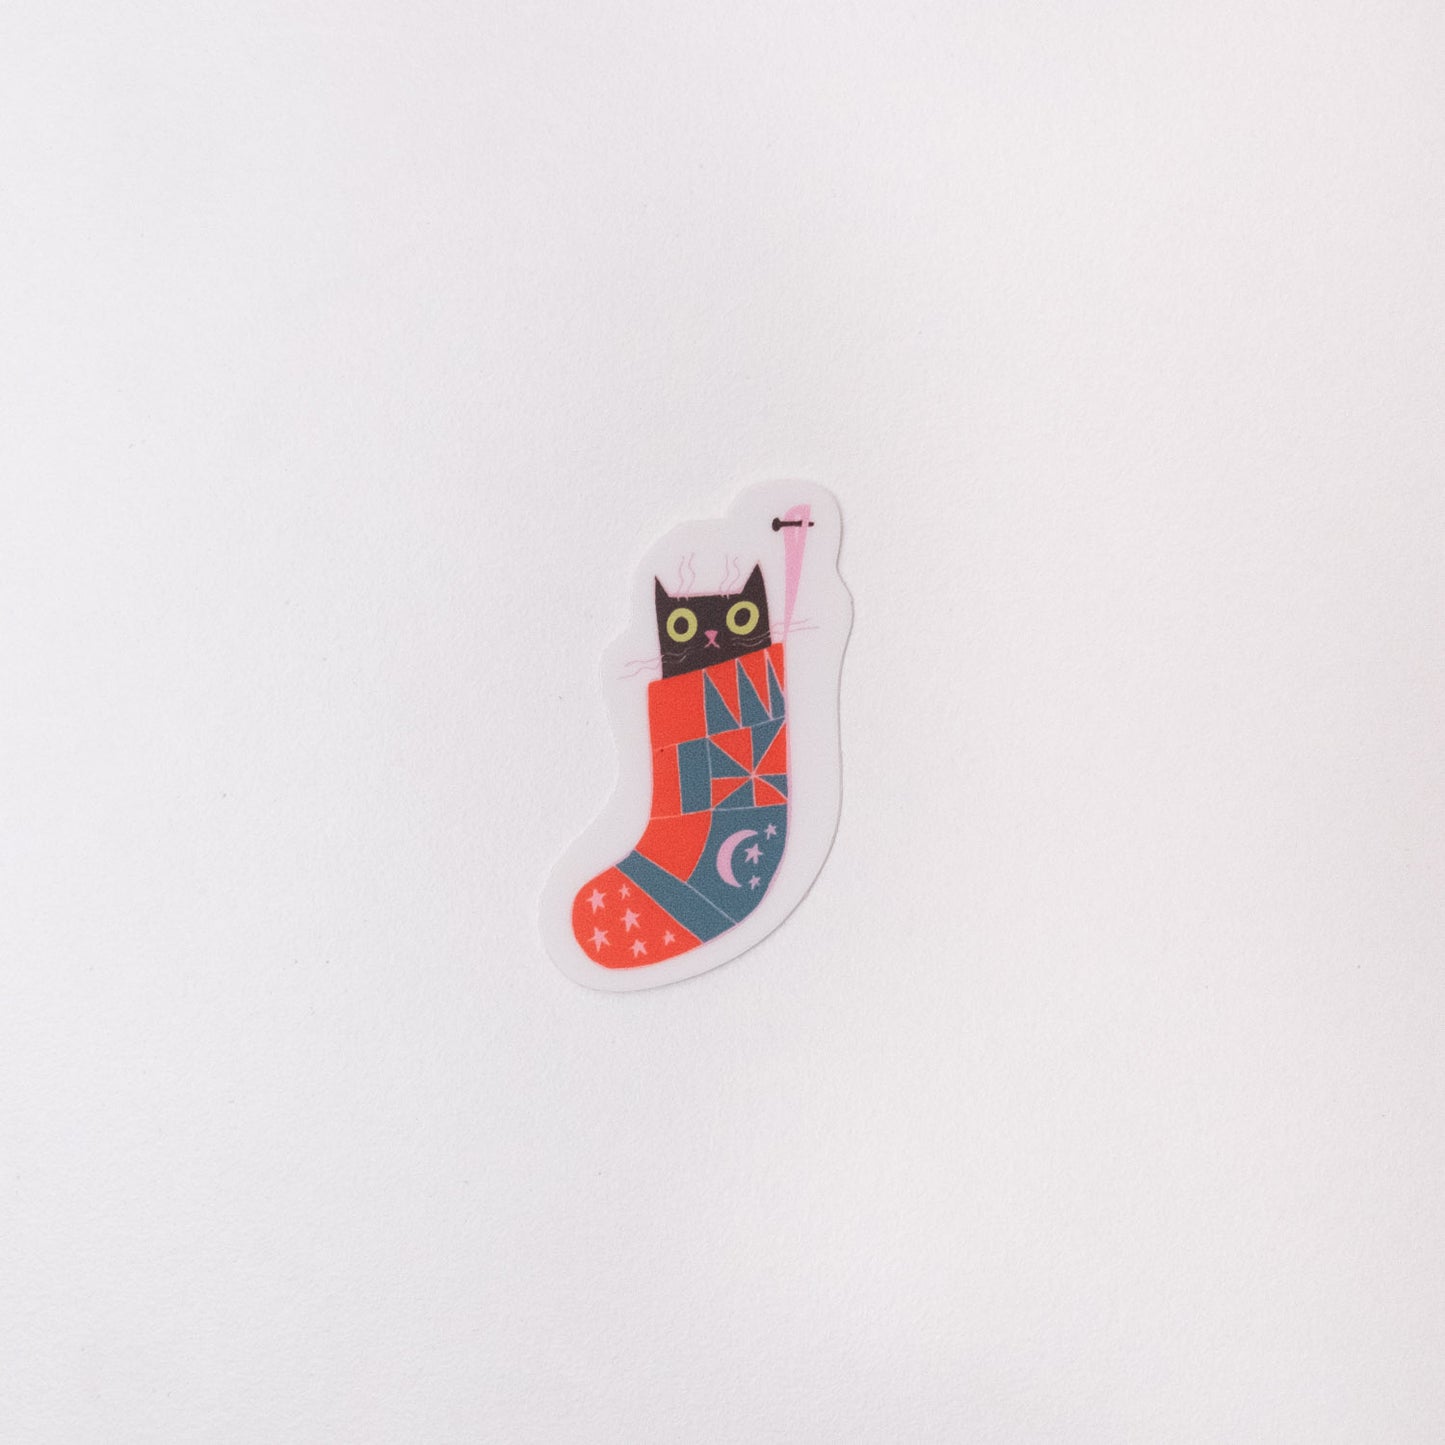 Quilted Stocking Cat ✿ Sticker ✿ LQC Exclusive